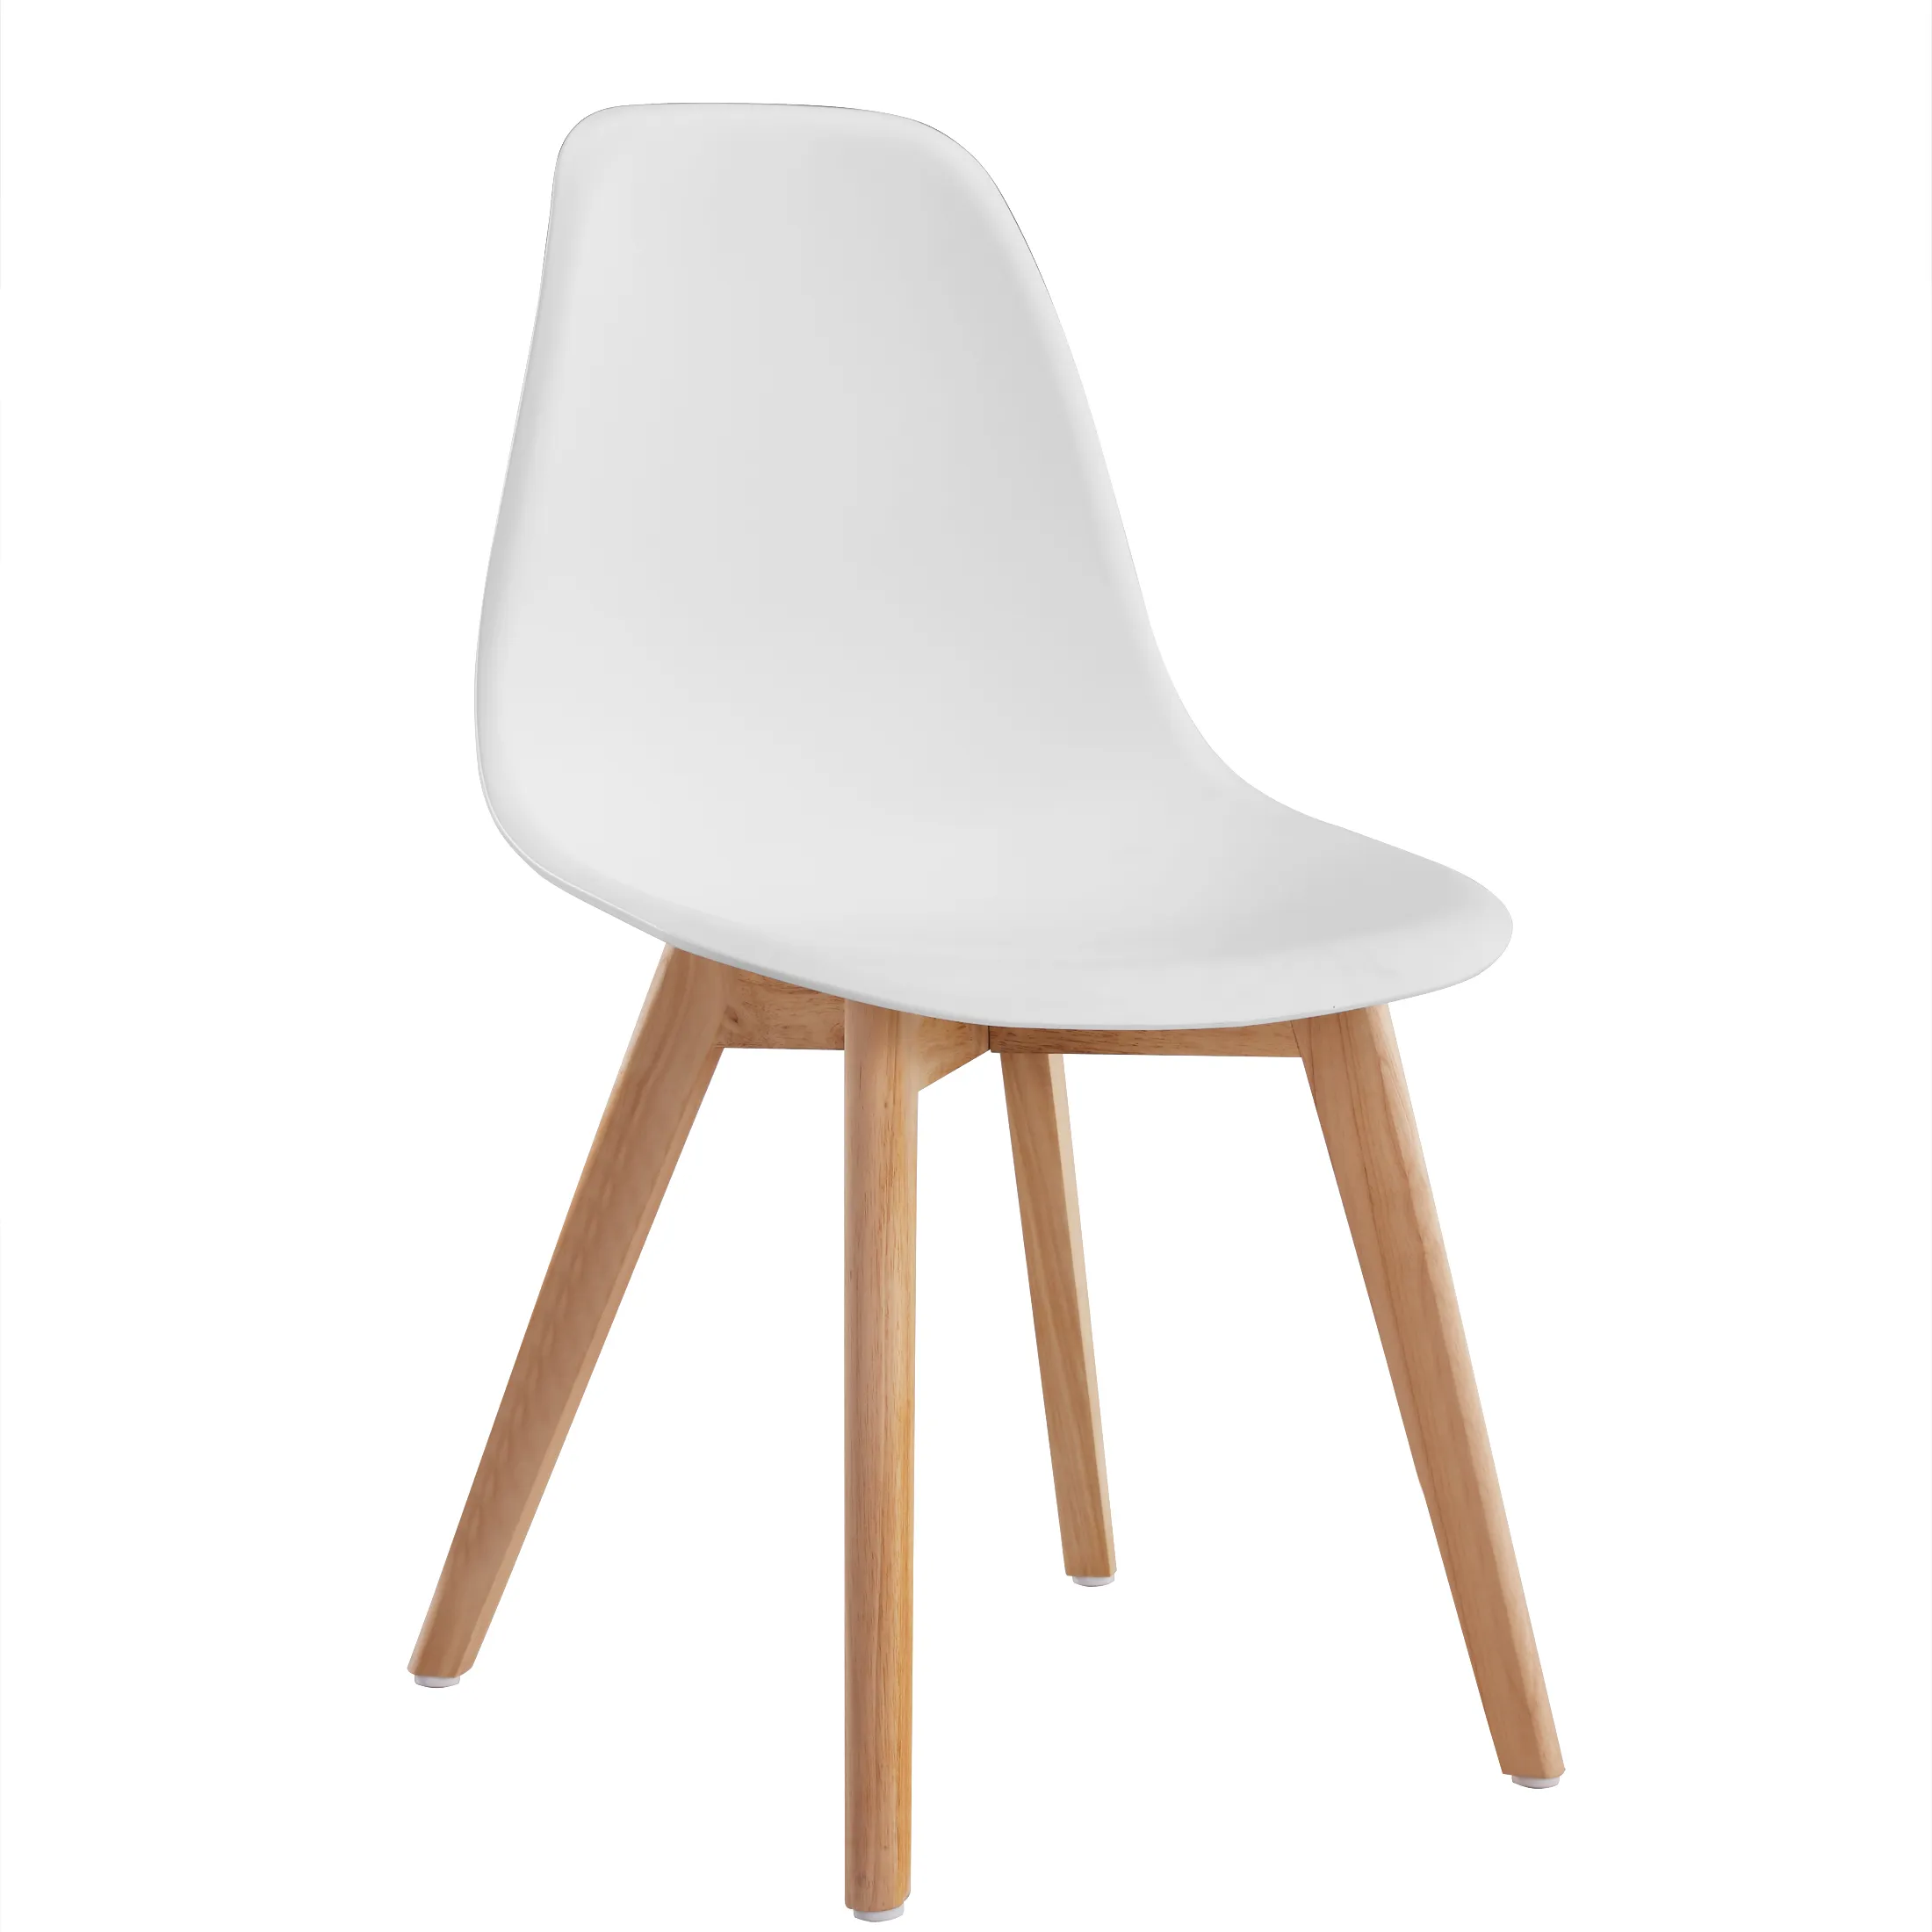 Wholesale Hotel White Simple Modern Wood Legs Plastic Seat Design Restaurant Dining Chair Wooden Legs